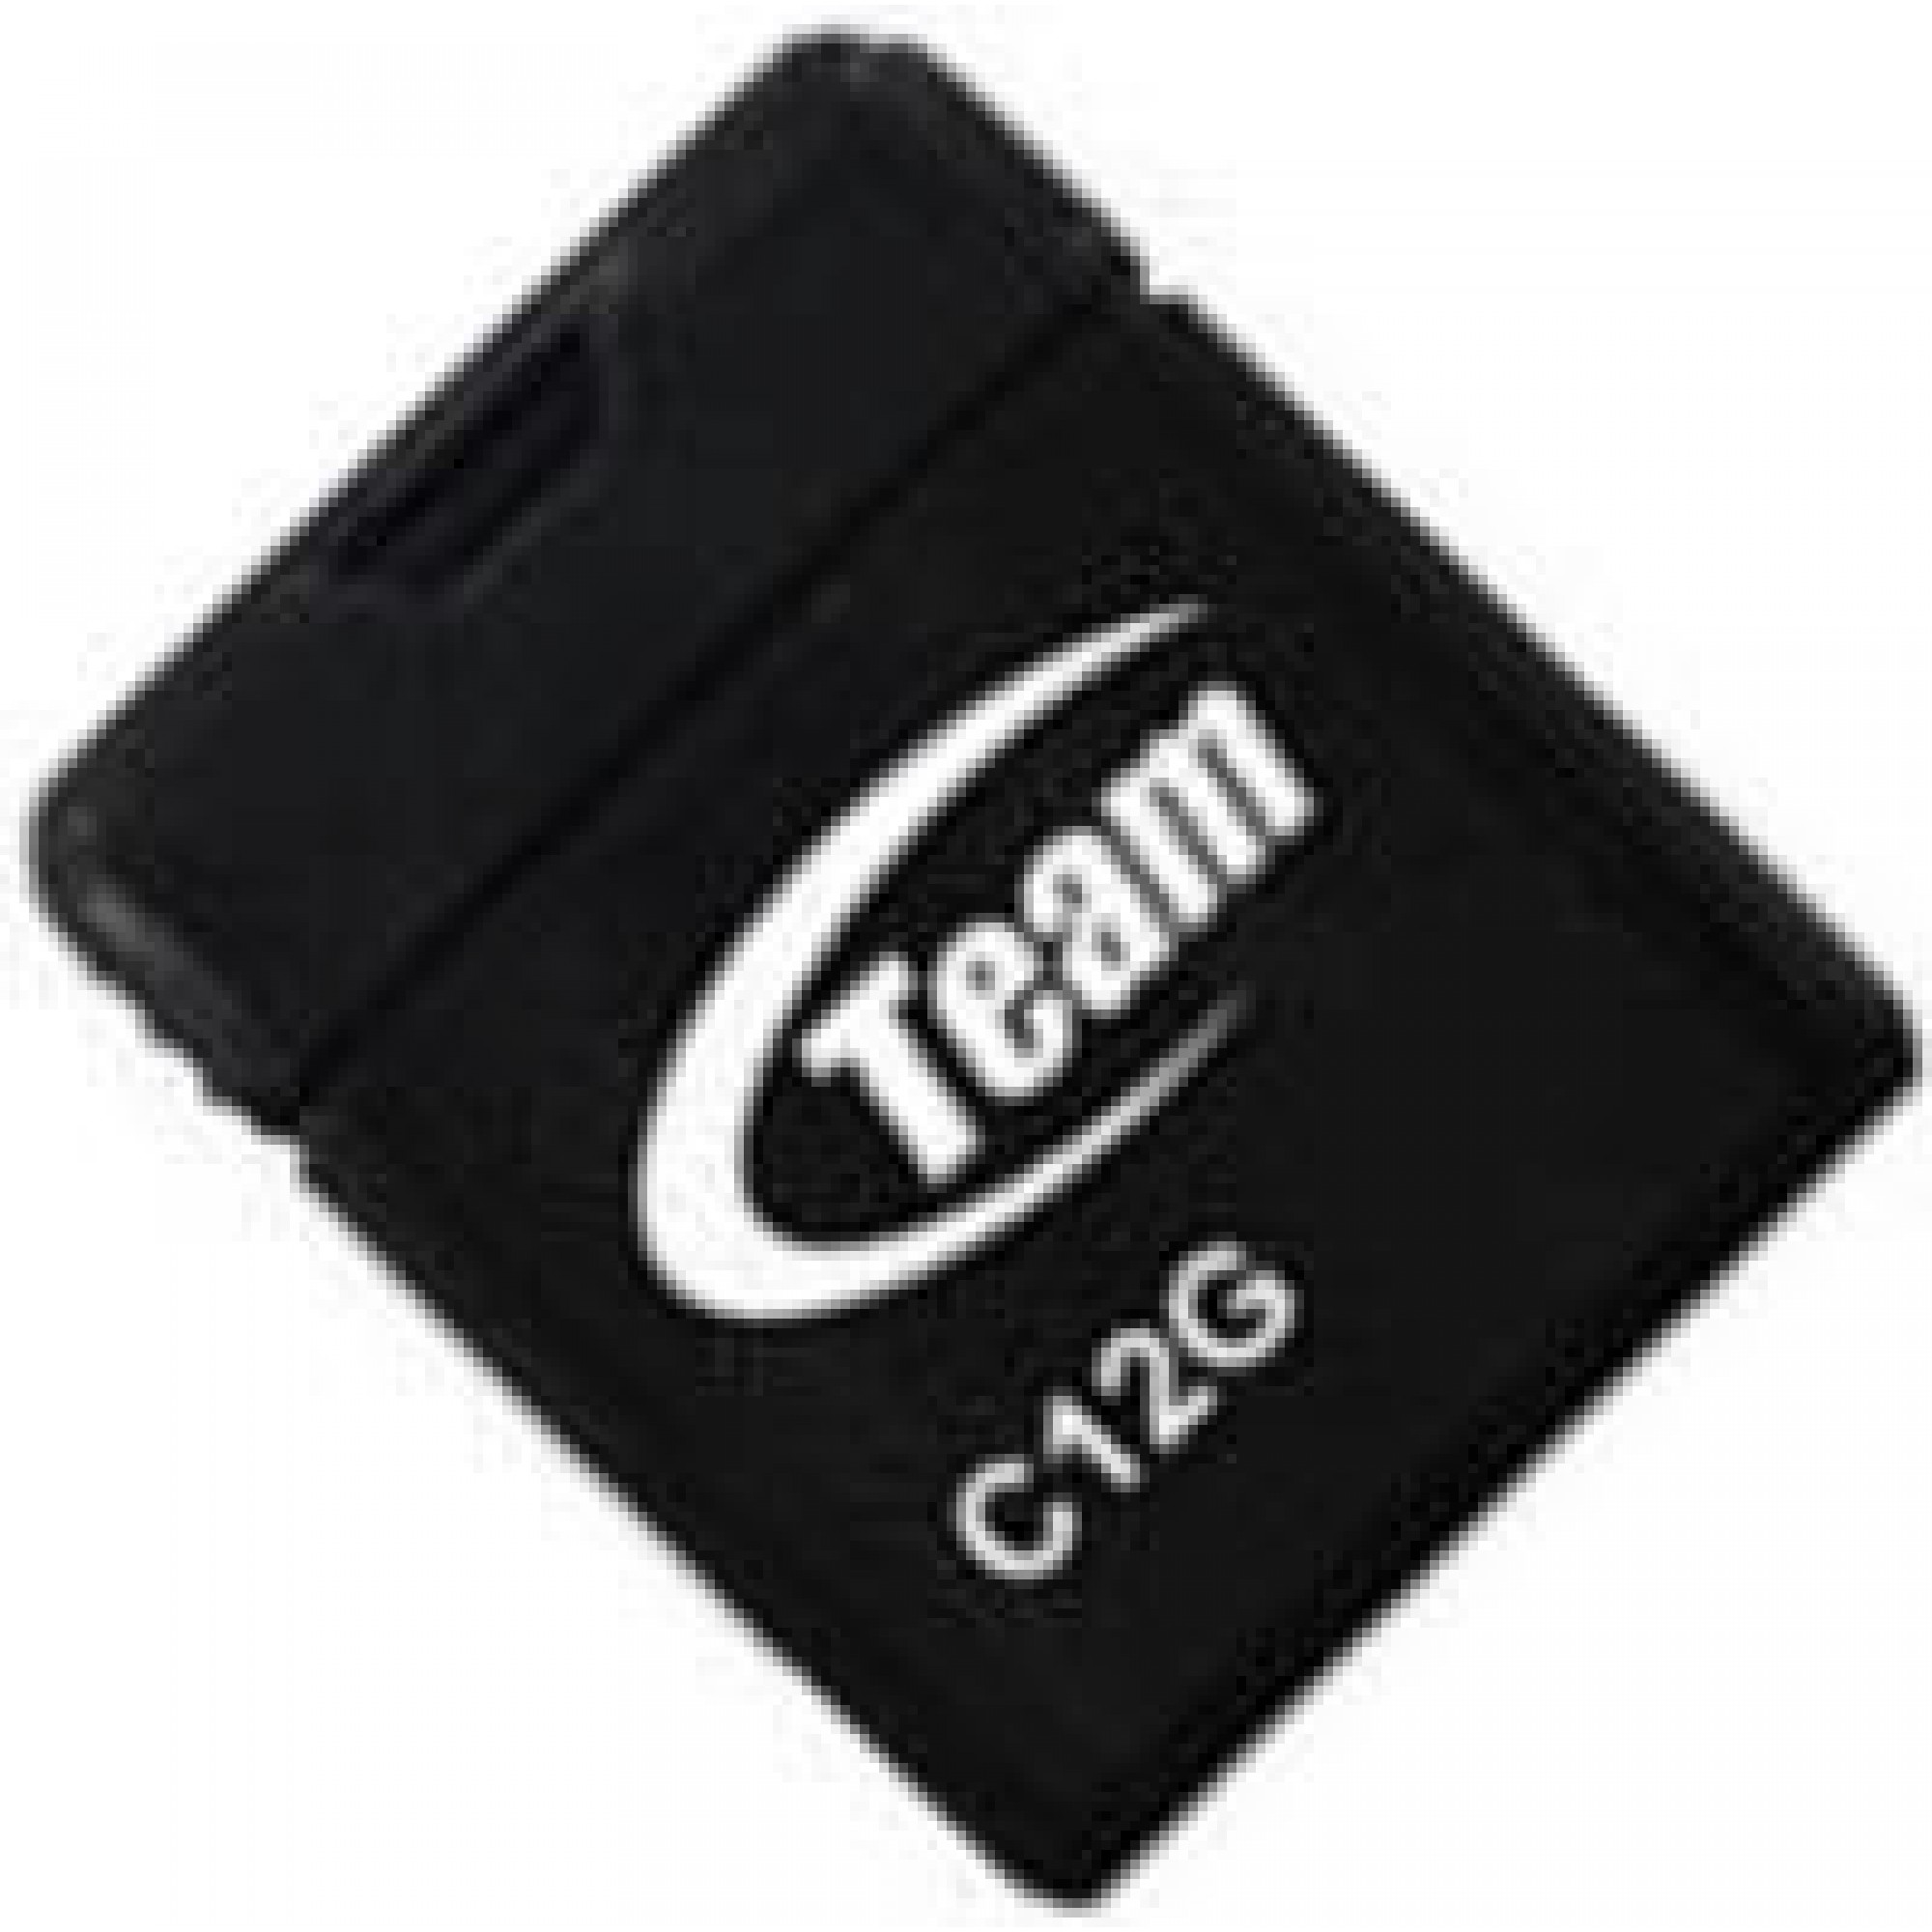 USB Flash накопичувач TeamGroup 32Gb чорний c12G